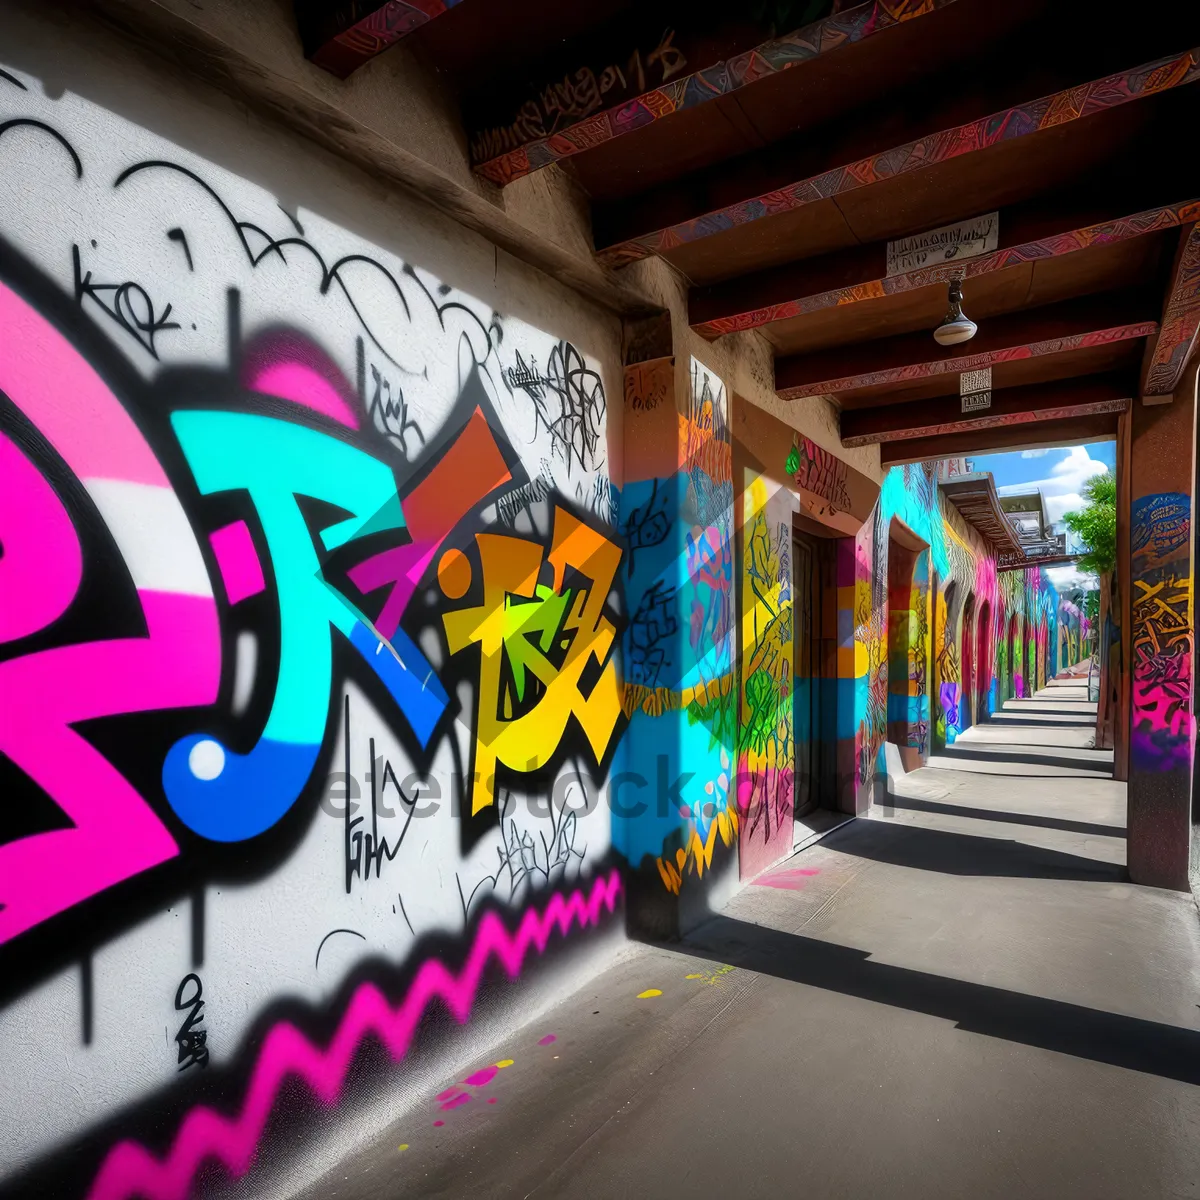 Picture of Vibrant Urban Marketplace with Graffiti Art